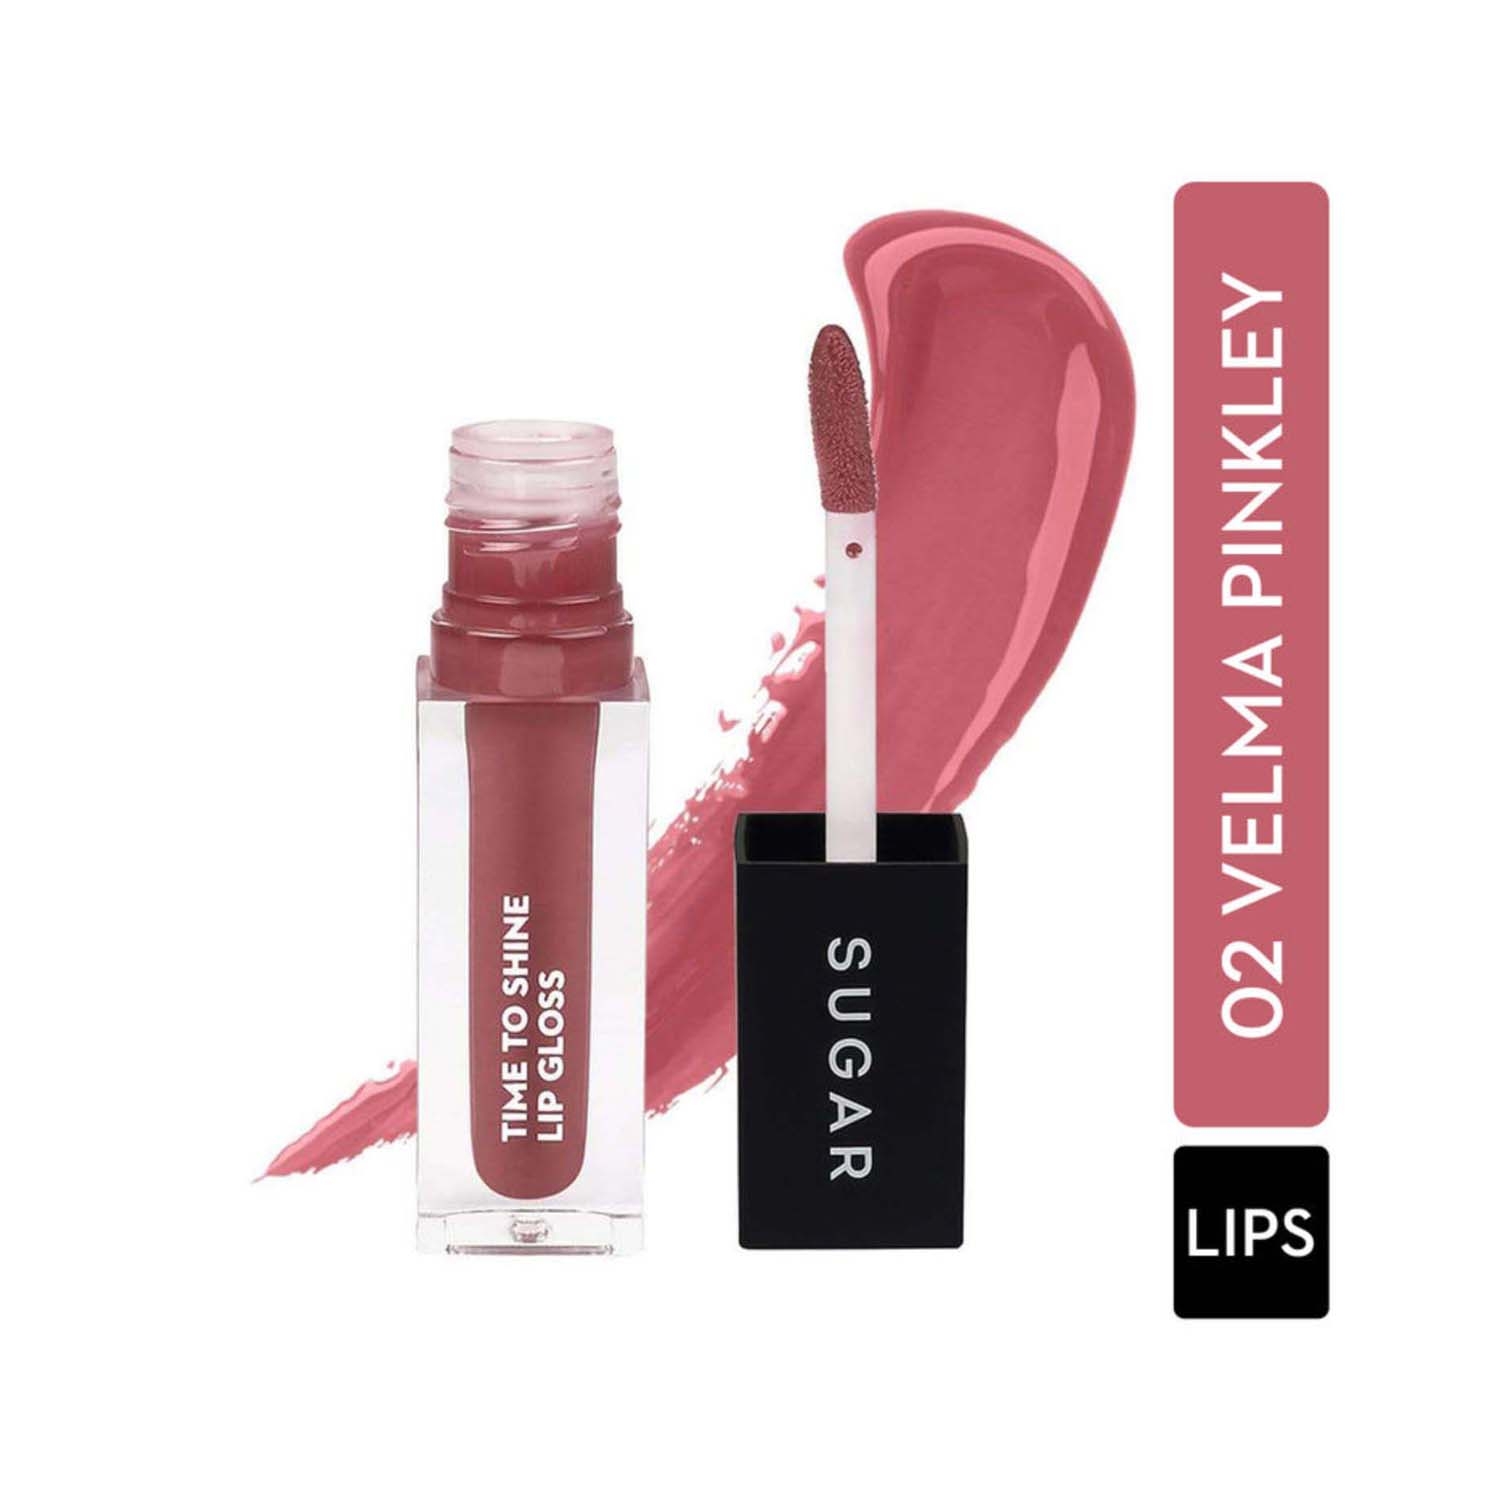 SUGAR Cosmetics | SUGAR Cosmetics Time To Shine Lip Gloss - 02 Velma Pinkley (4.5g)